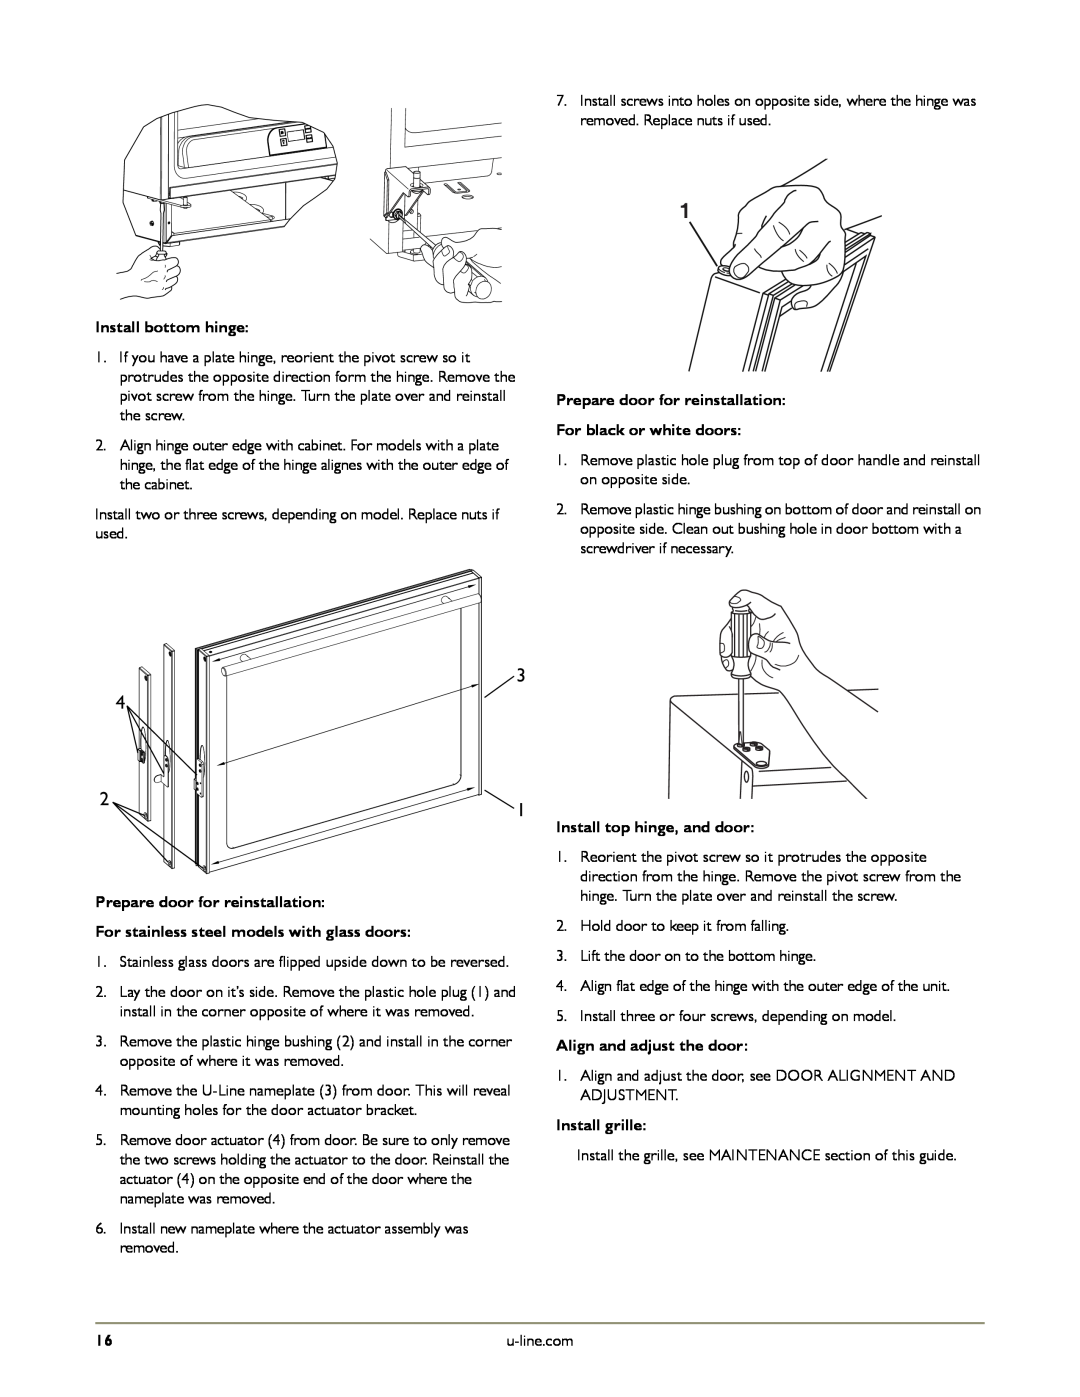 U-Line U-CO29FB-00 manual Install bottom hinge, Prepare door for reinstallation, For black or white doors, Install grille 